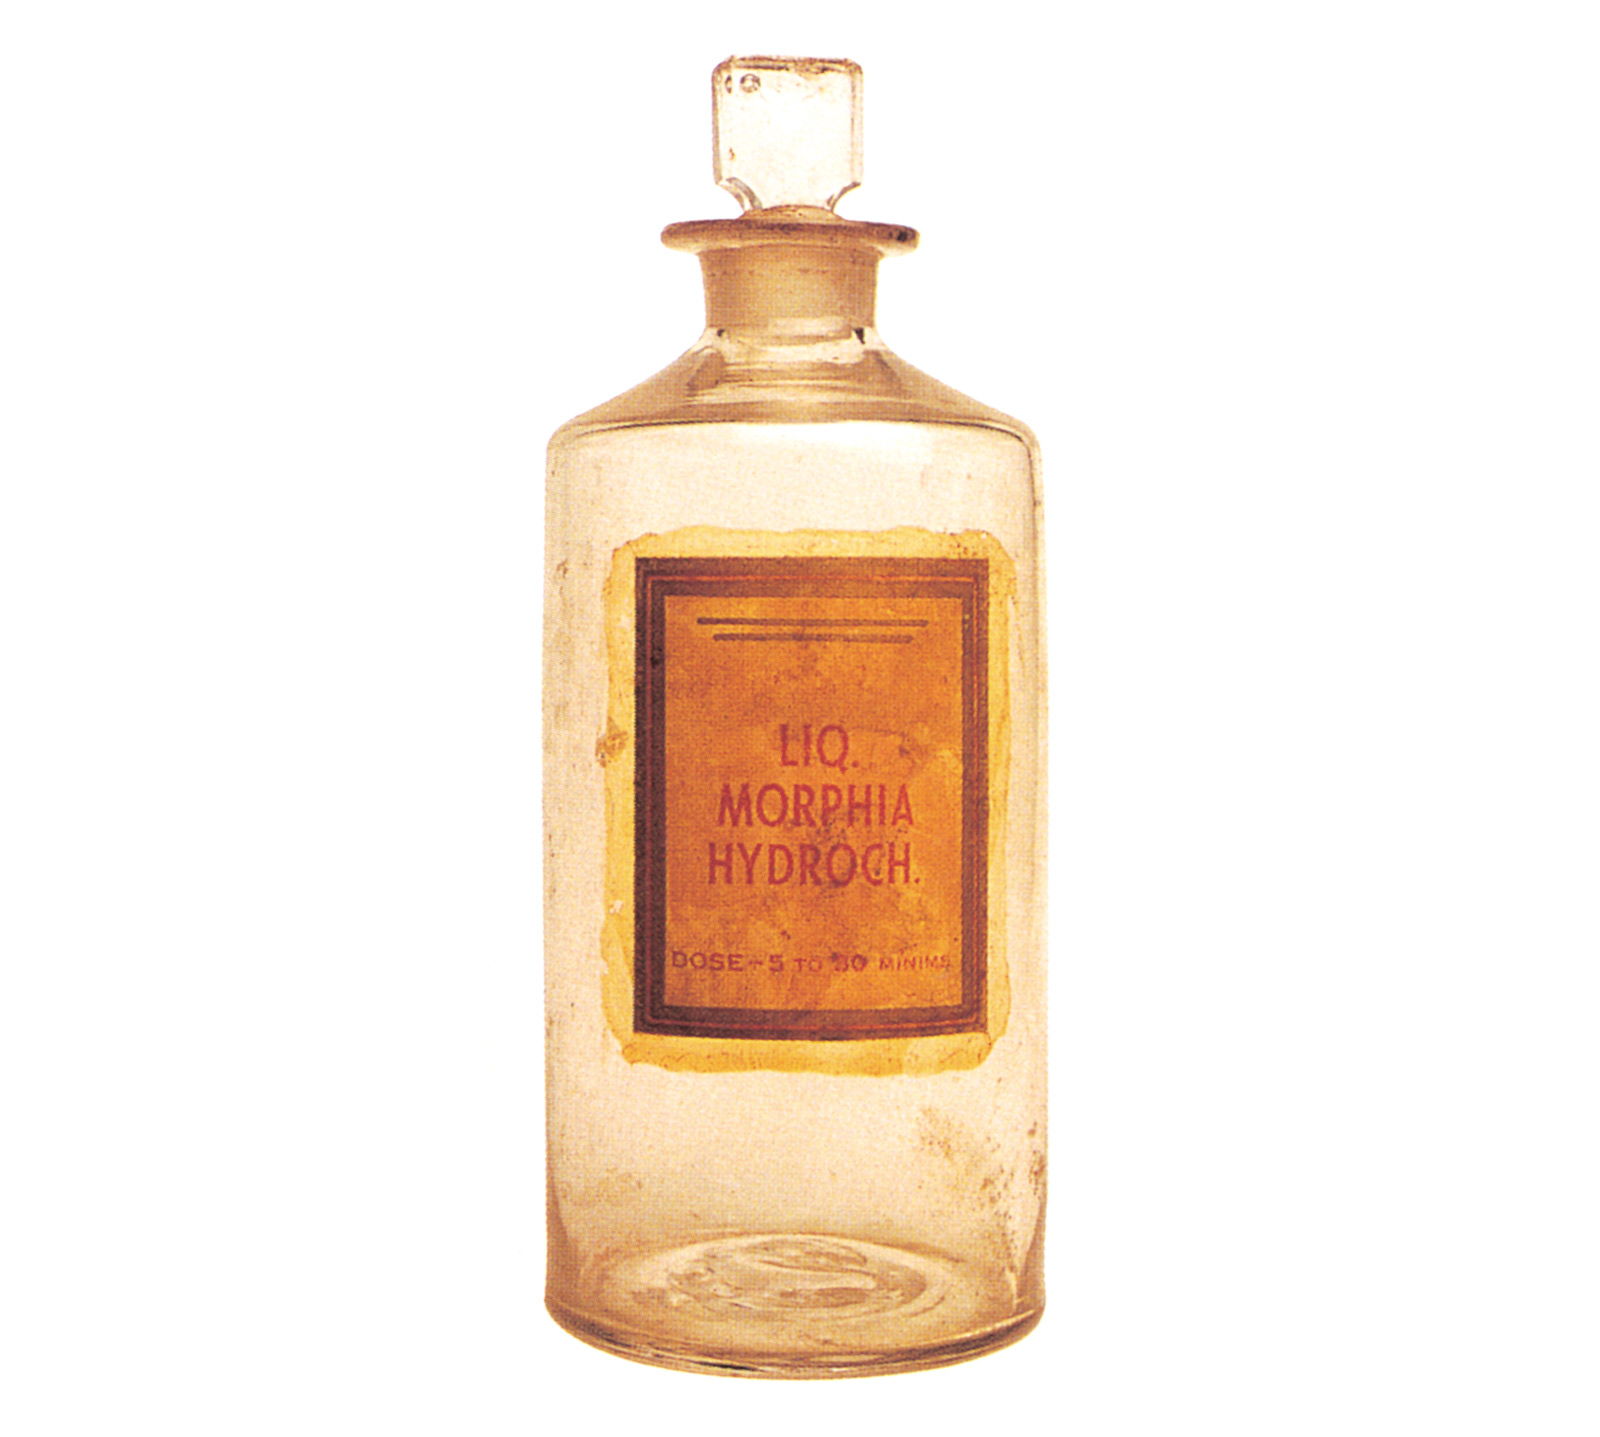 An image of a nineteenth-century Australian morphine bottle.